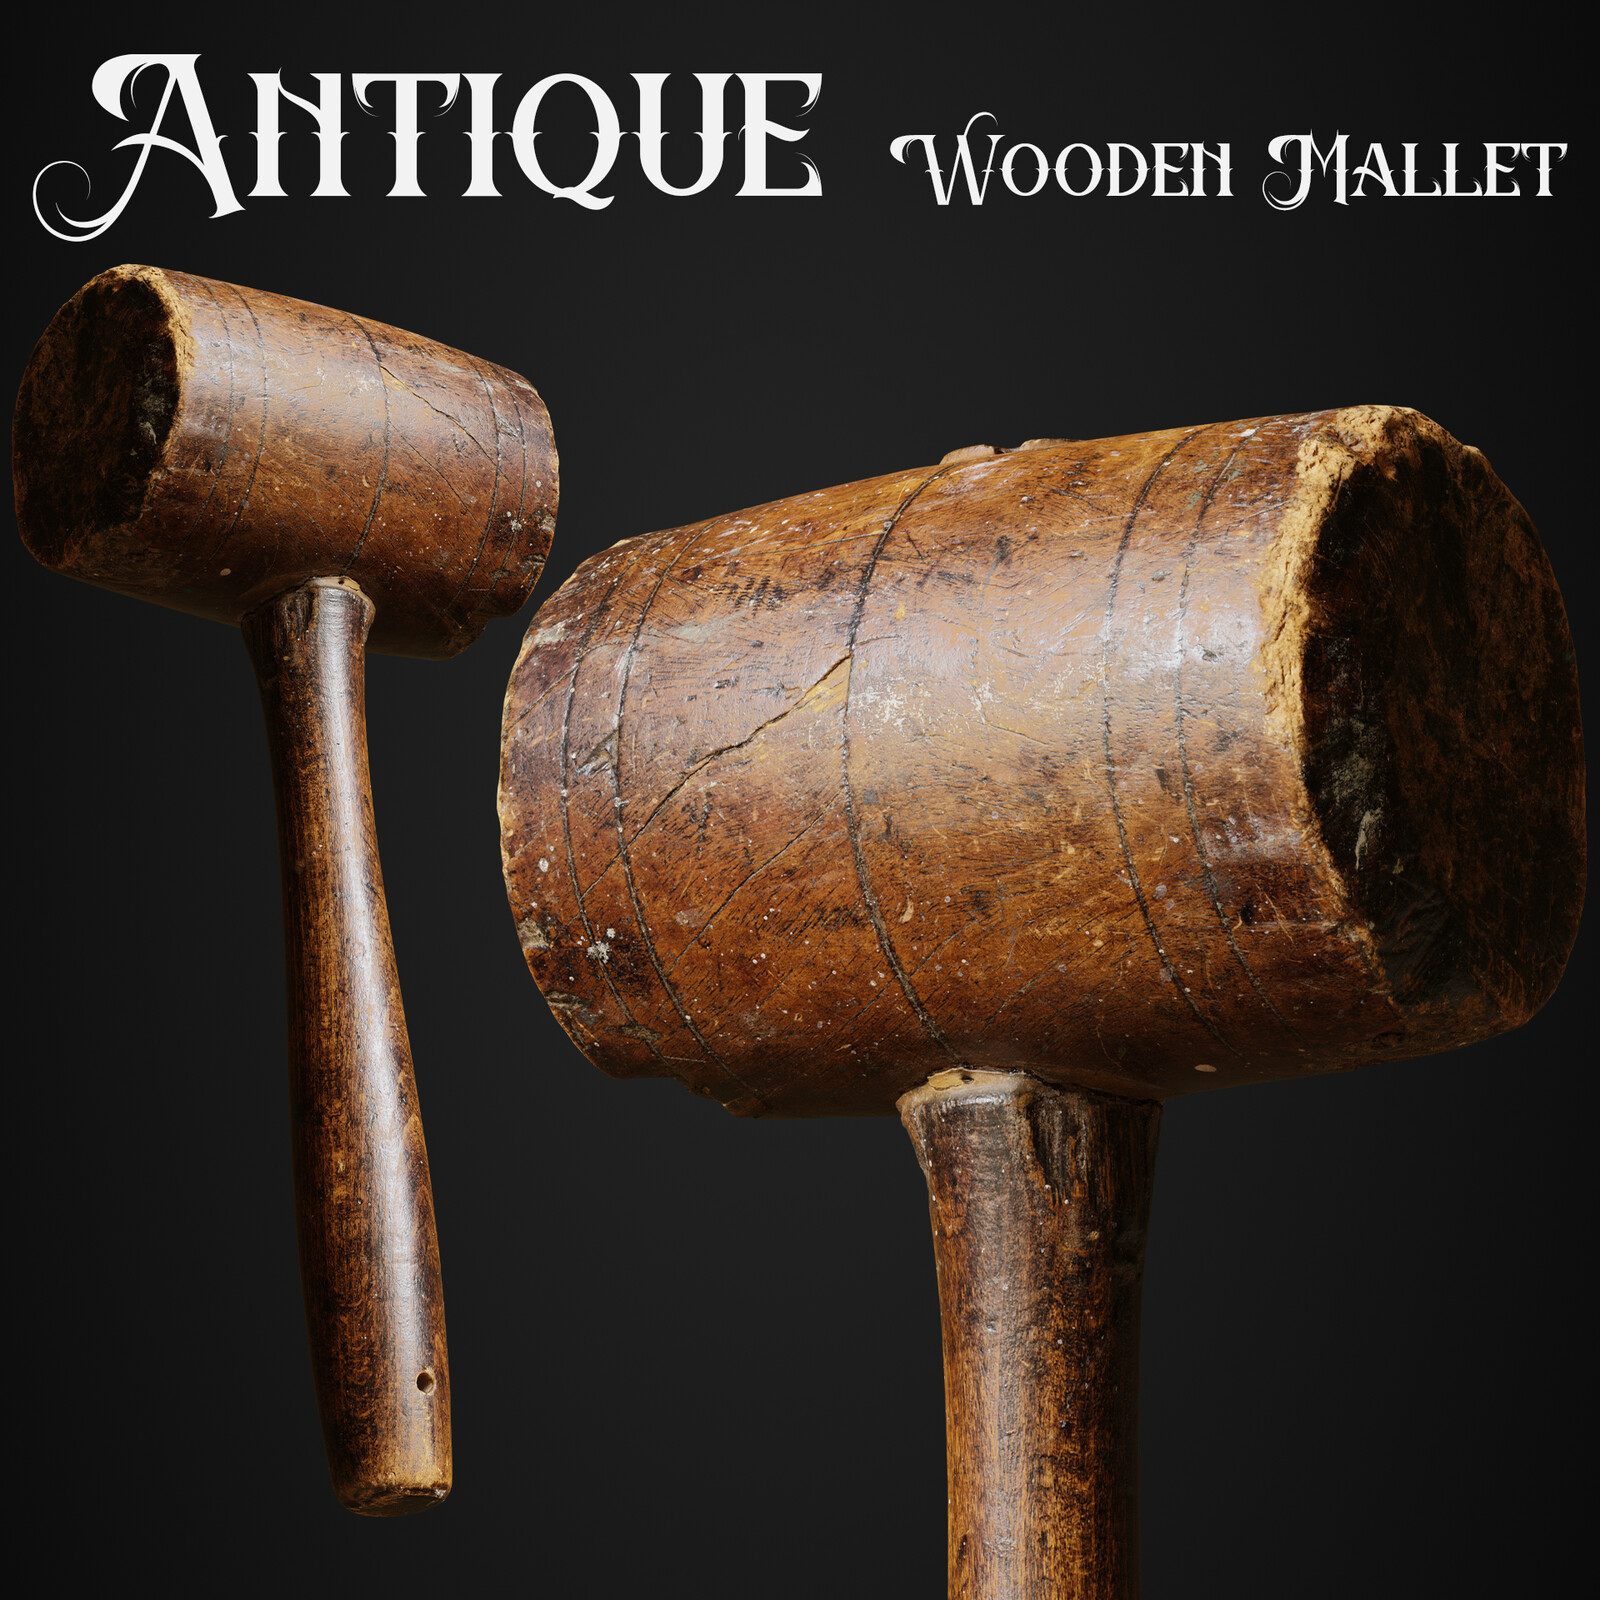 Antique Wooden Mallet